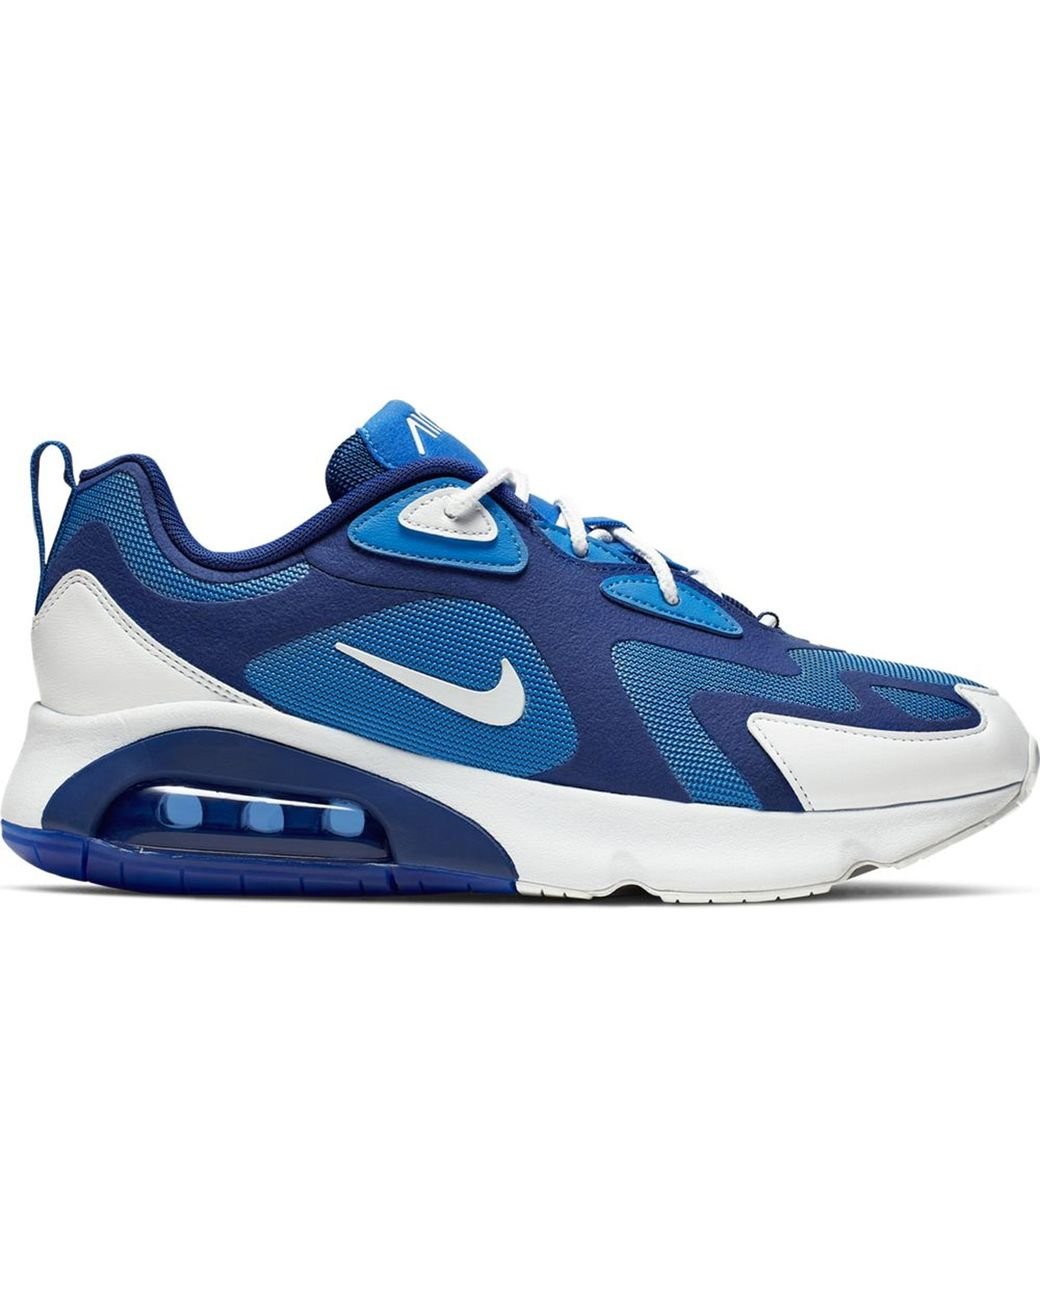 Nike Air Max 200 Track \u0026 Field Blue for 